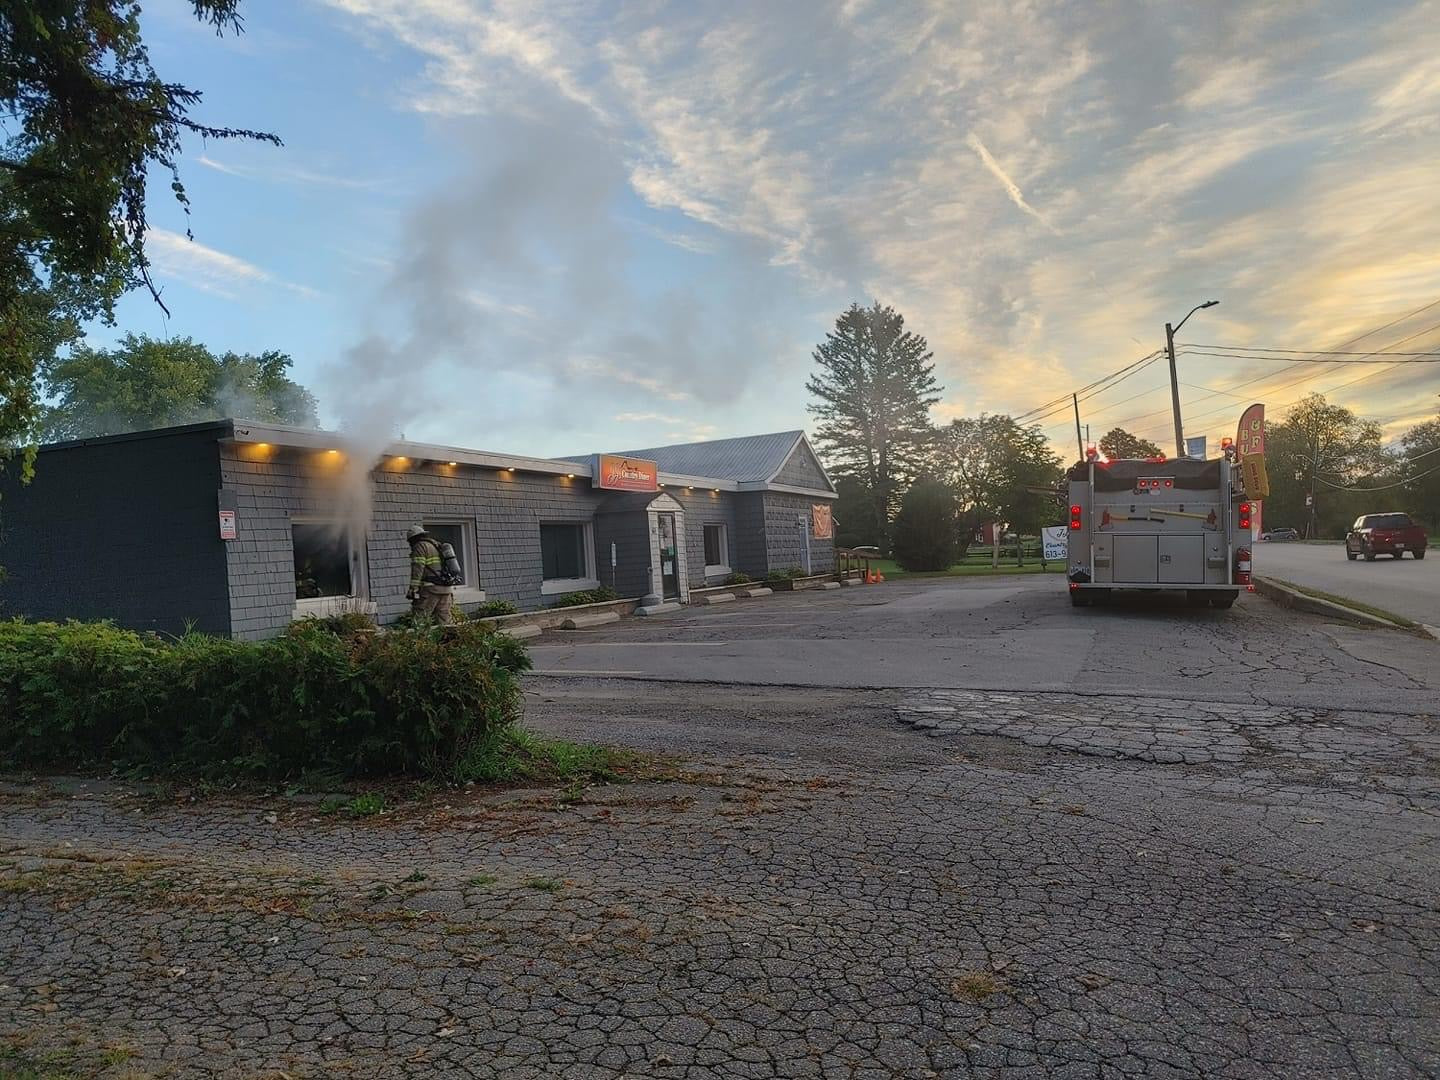 JJ's Country Diner during September 2021 fire